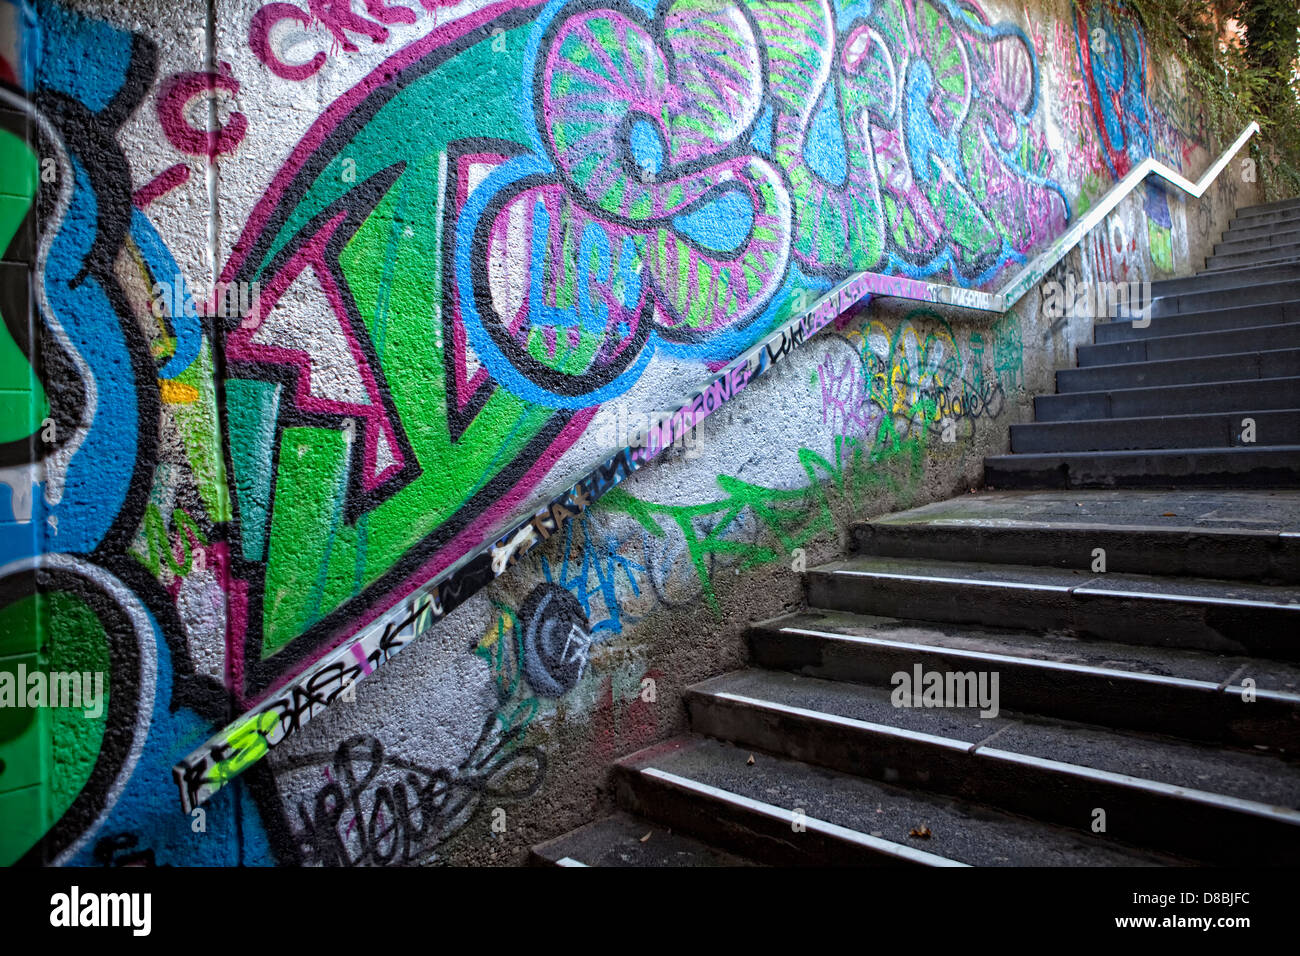 Una scala buia con graffiti, Germania, Europa, dunkler Treppenaufgang mit Graffiti Foto Stock